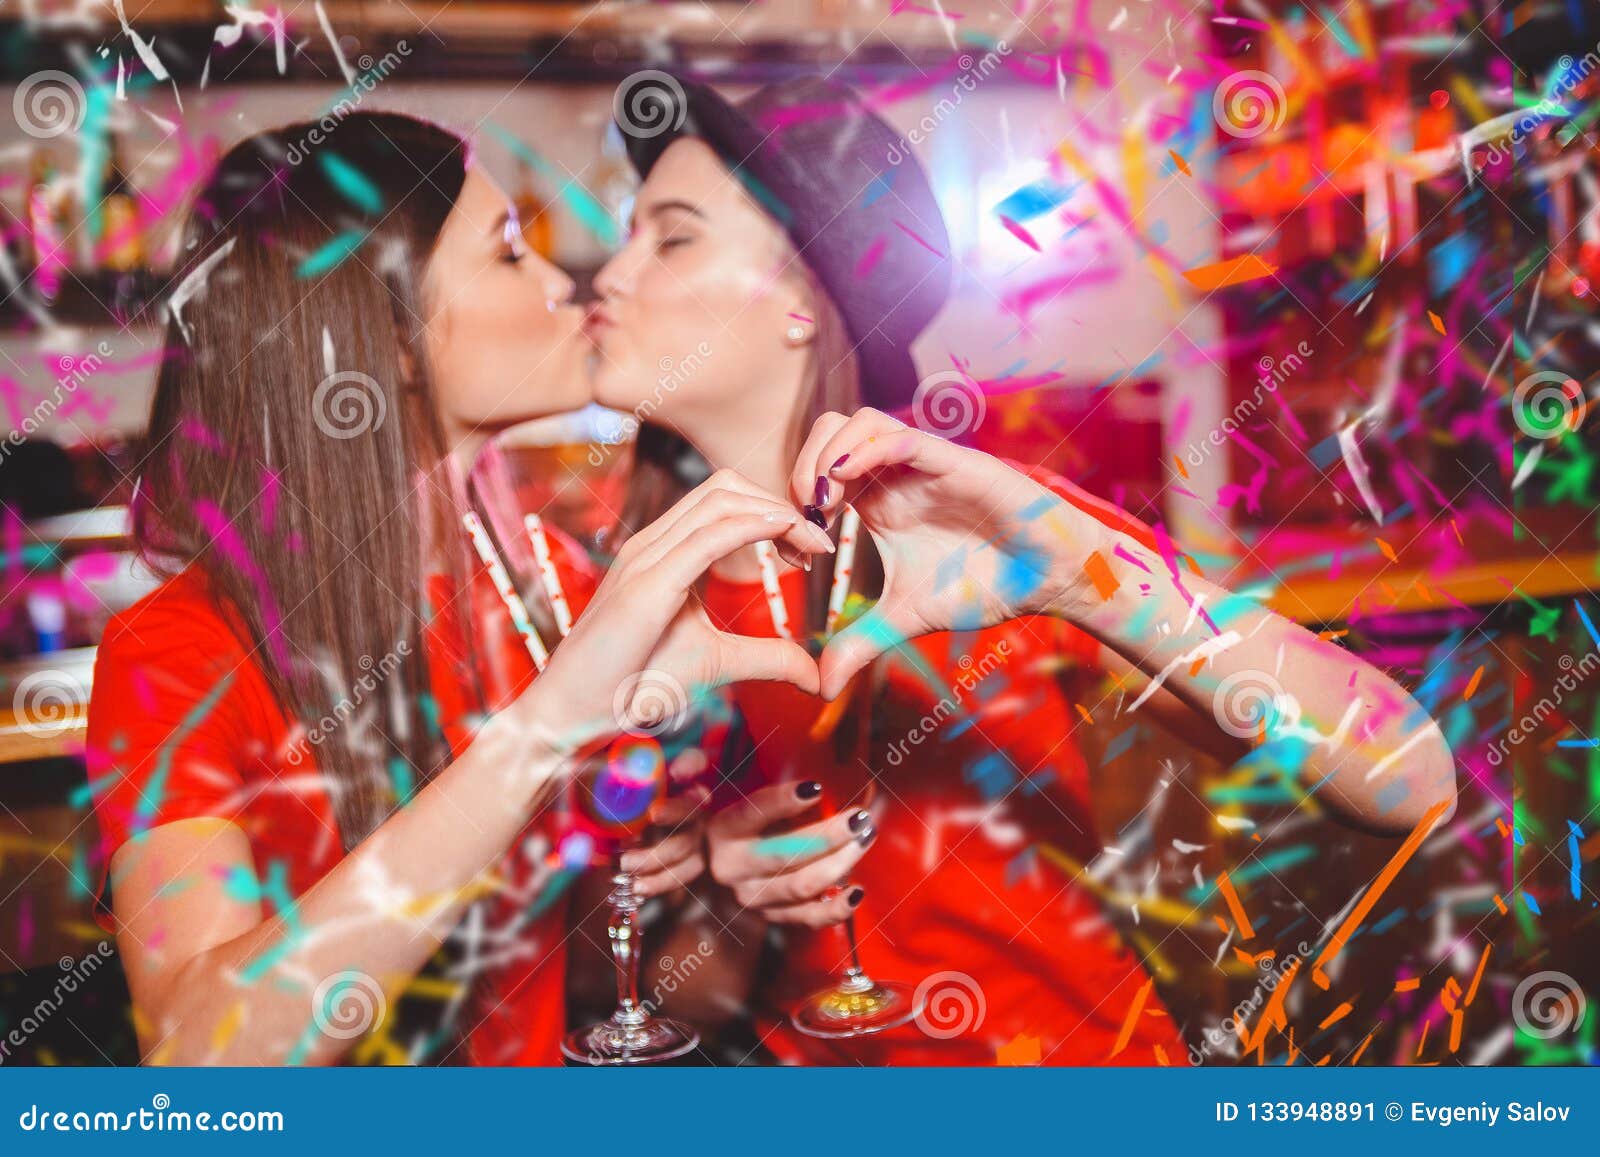 lesbian party girl